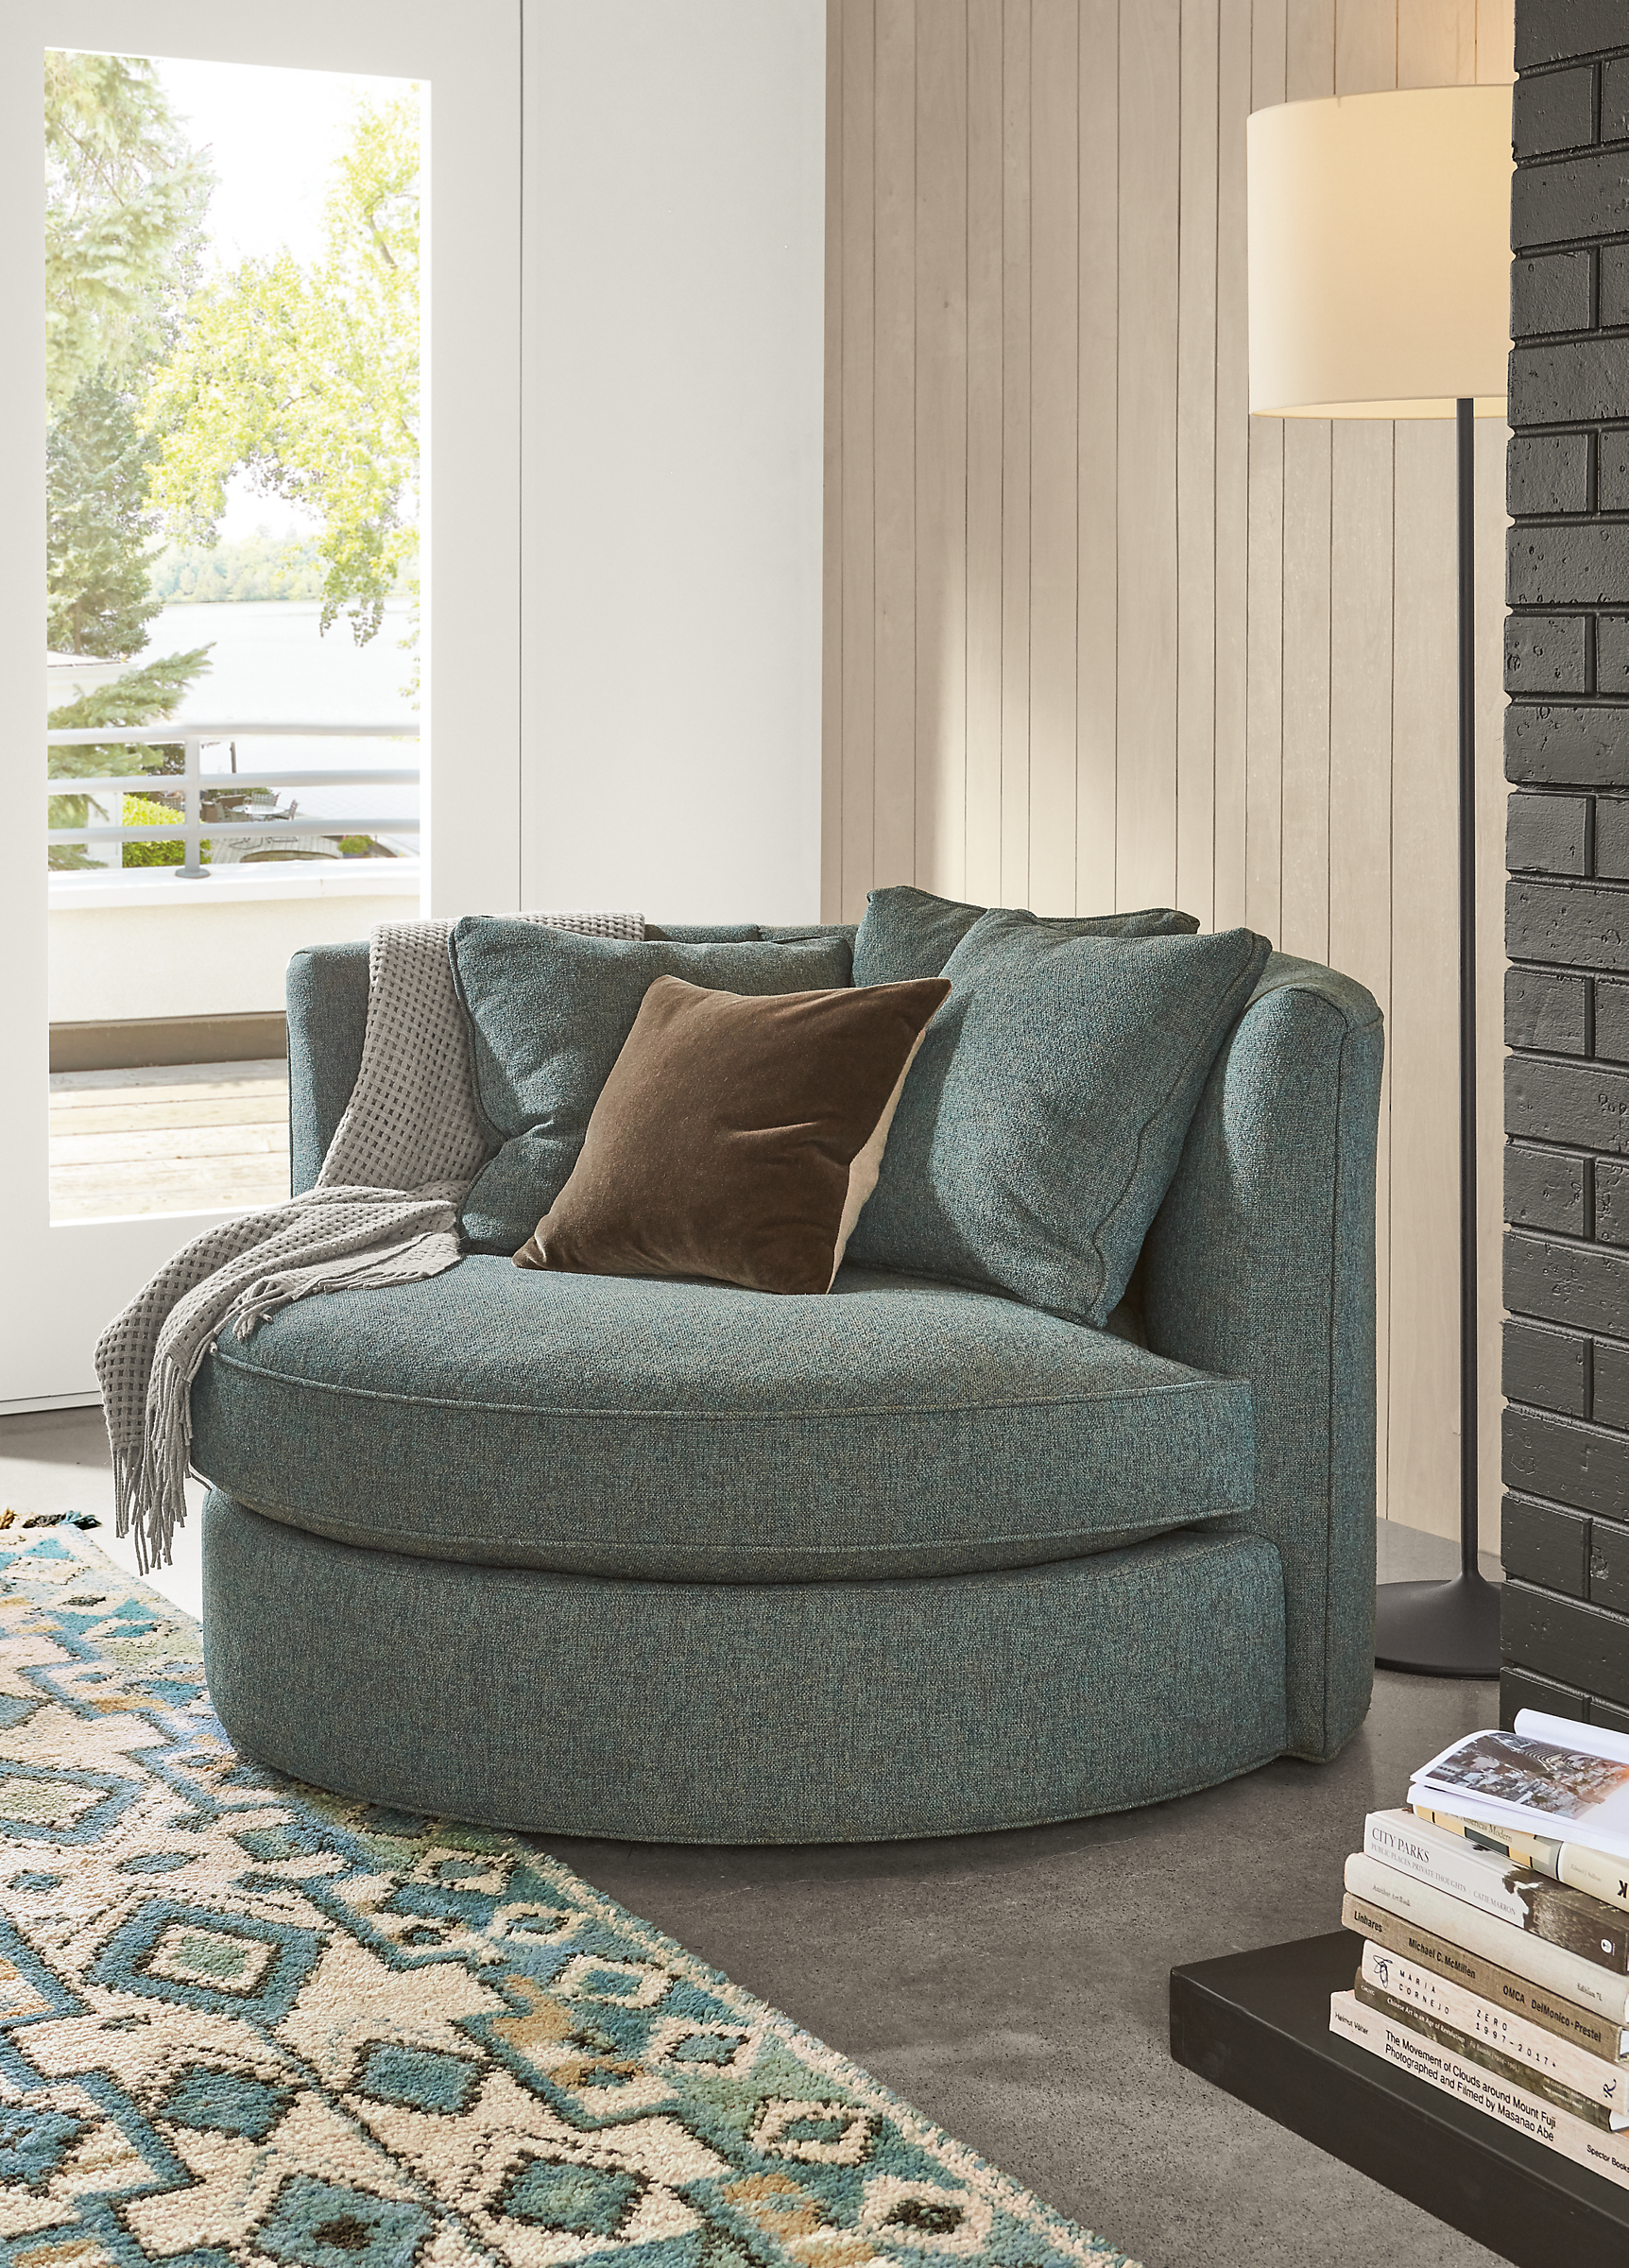 Detail of Eos swivel chair in Tatum Haze fabric in living room.